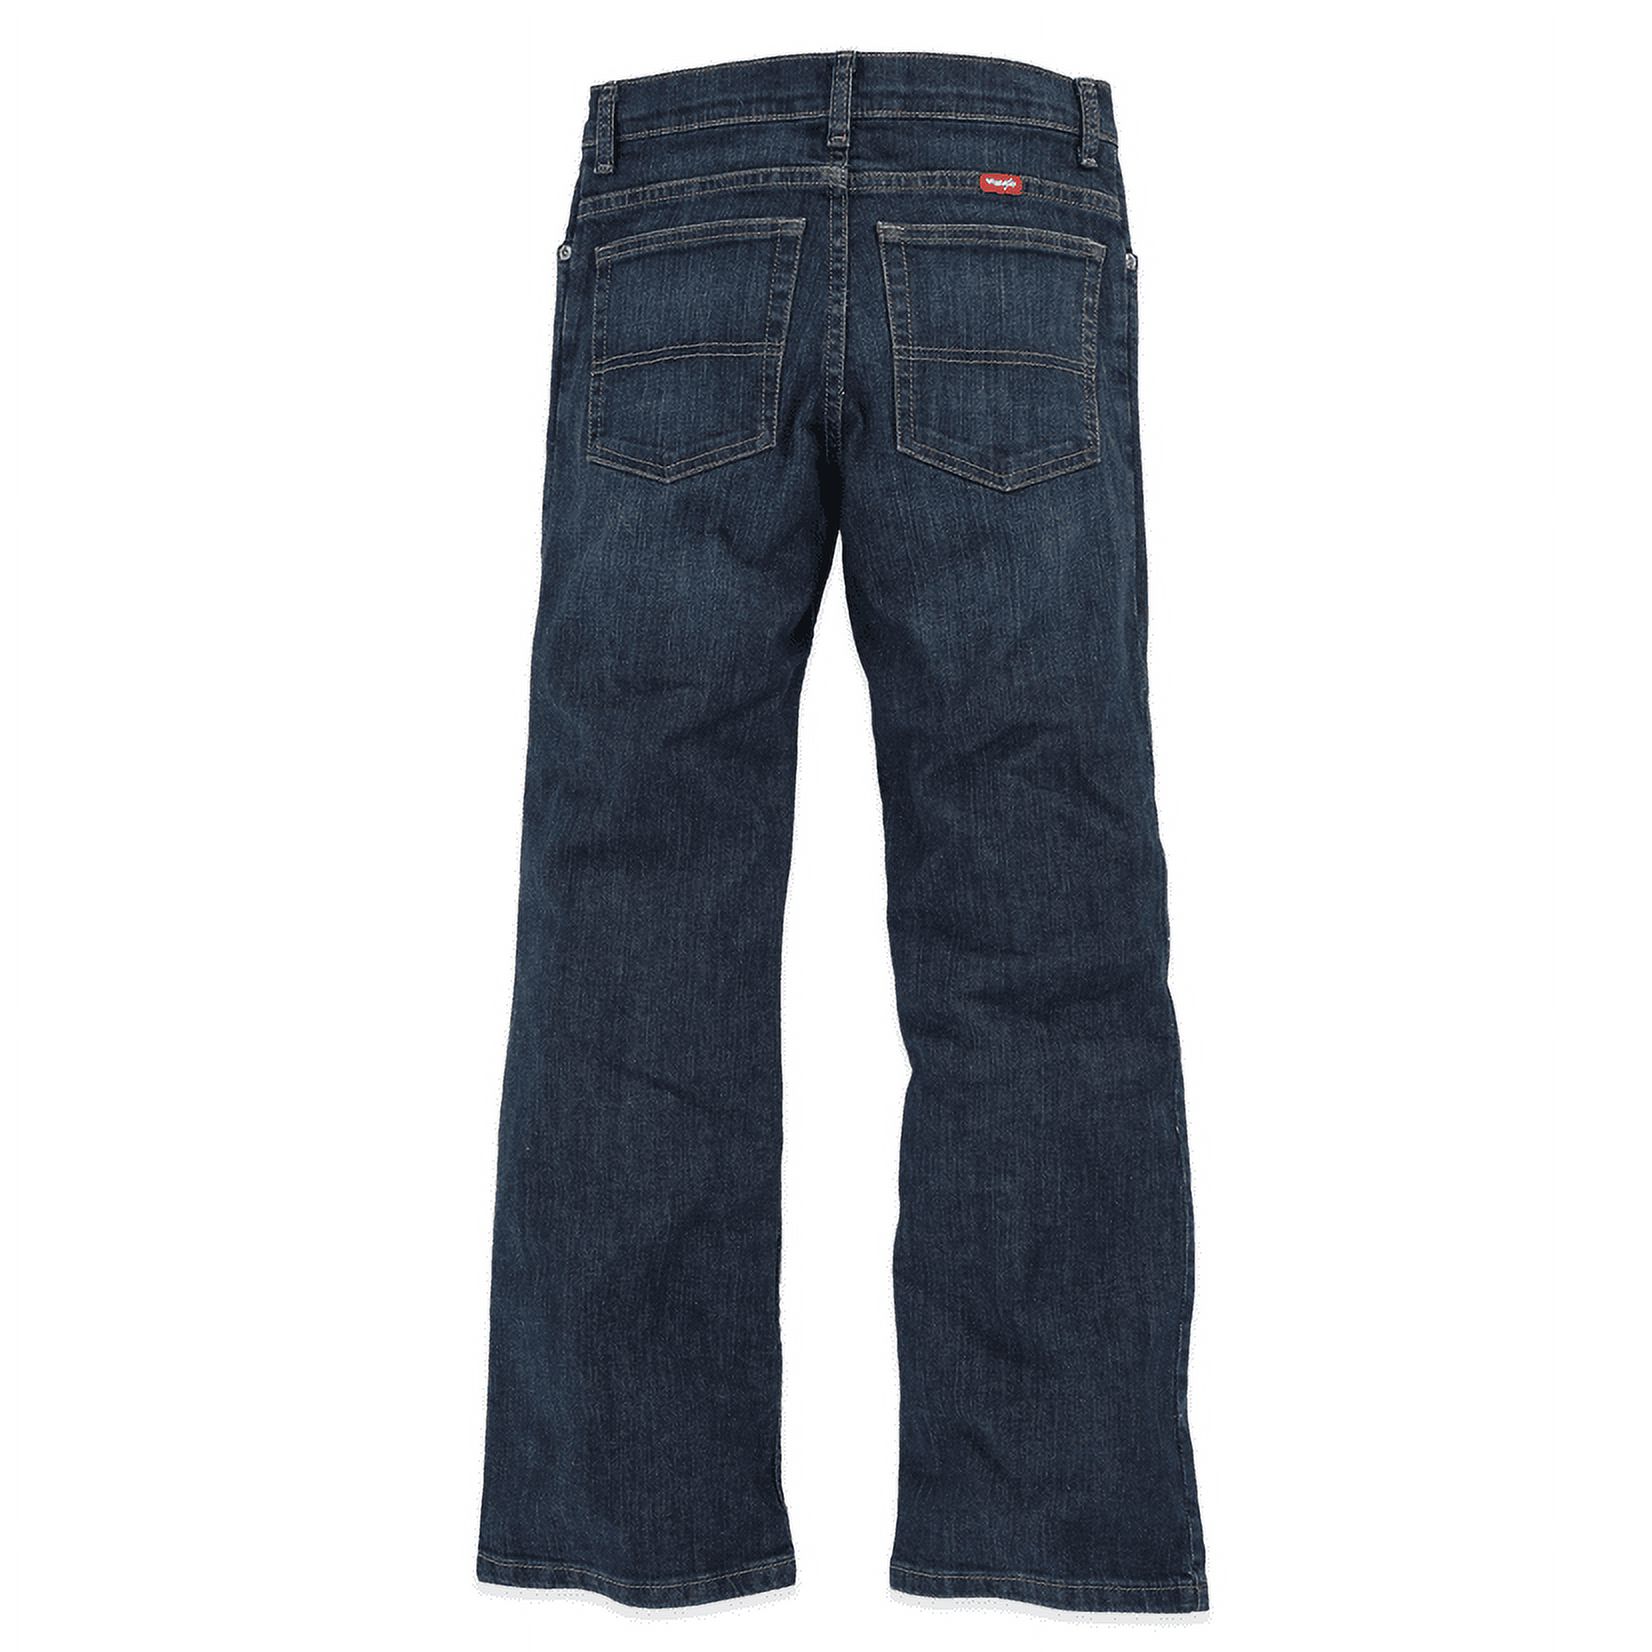 Wrangler Boys Bootcut Denim Jeans, Sizes 4-18 & Husky - image 4 of 6